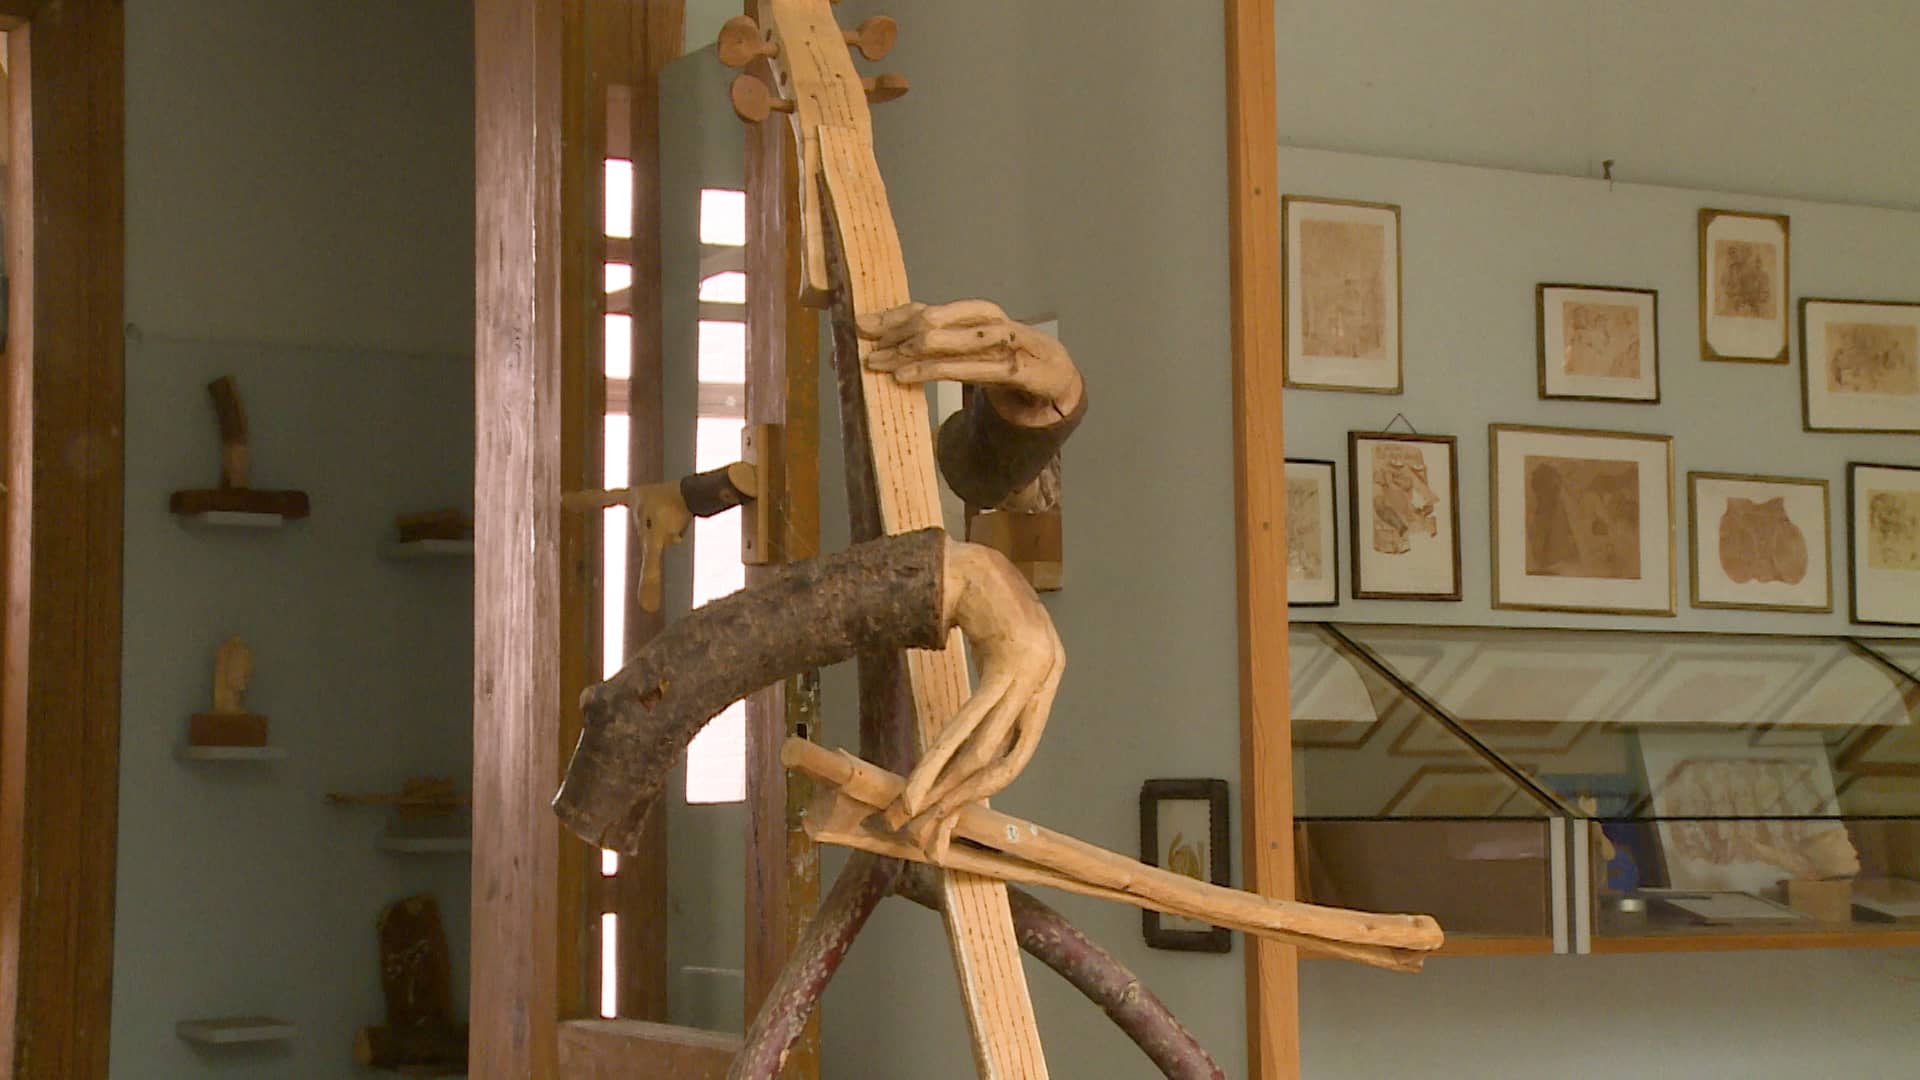 Cellospieler-Skulptur in Torrilhons Werkstatt